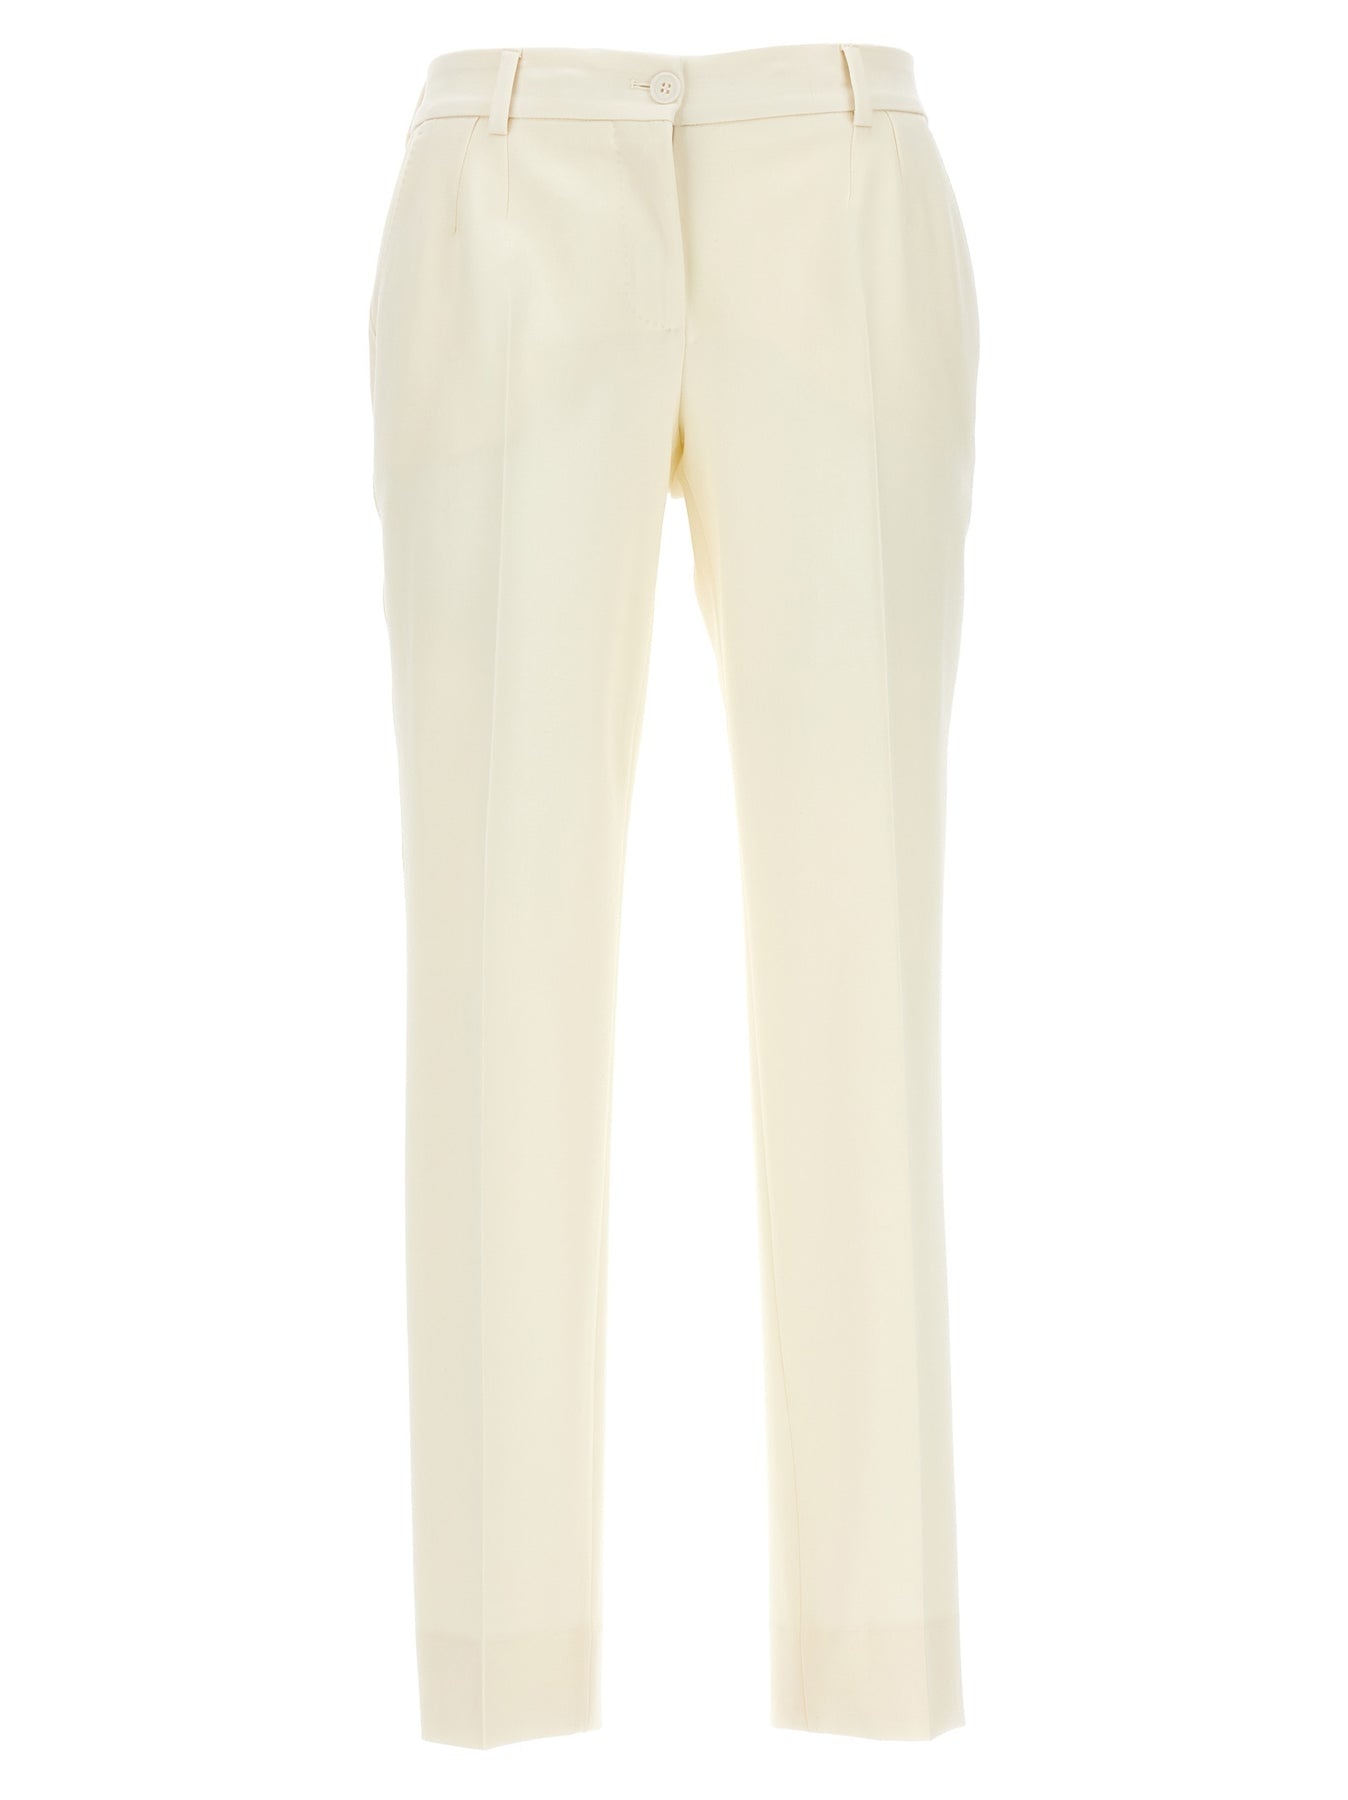 Essential Pants White - 1